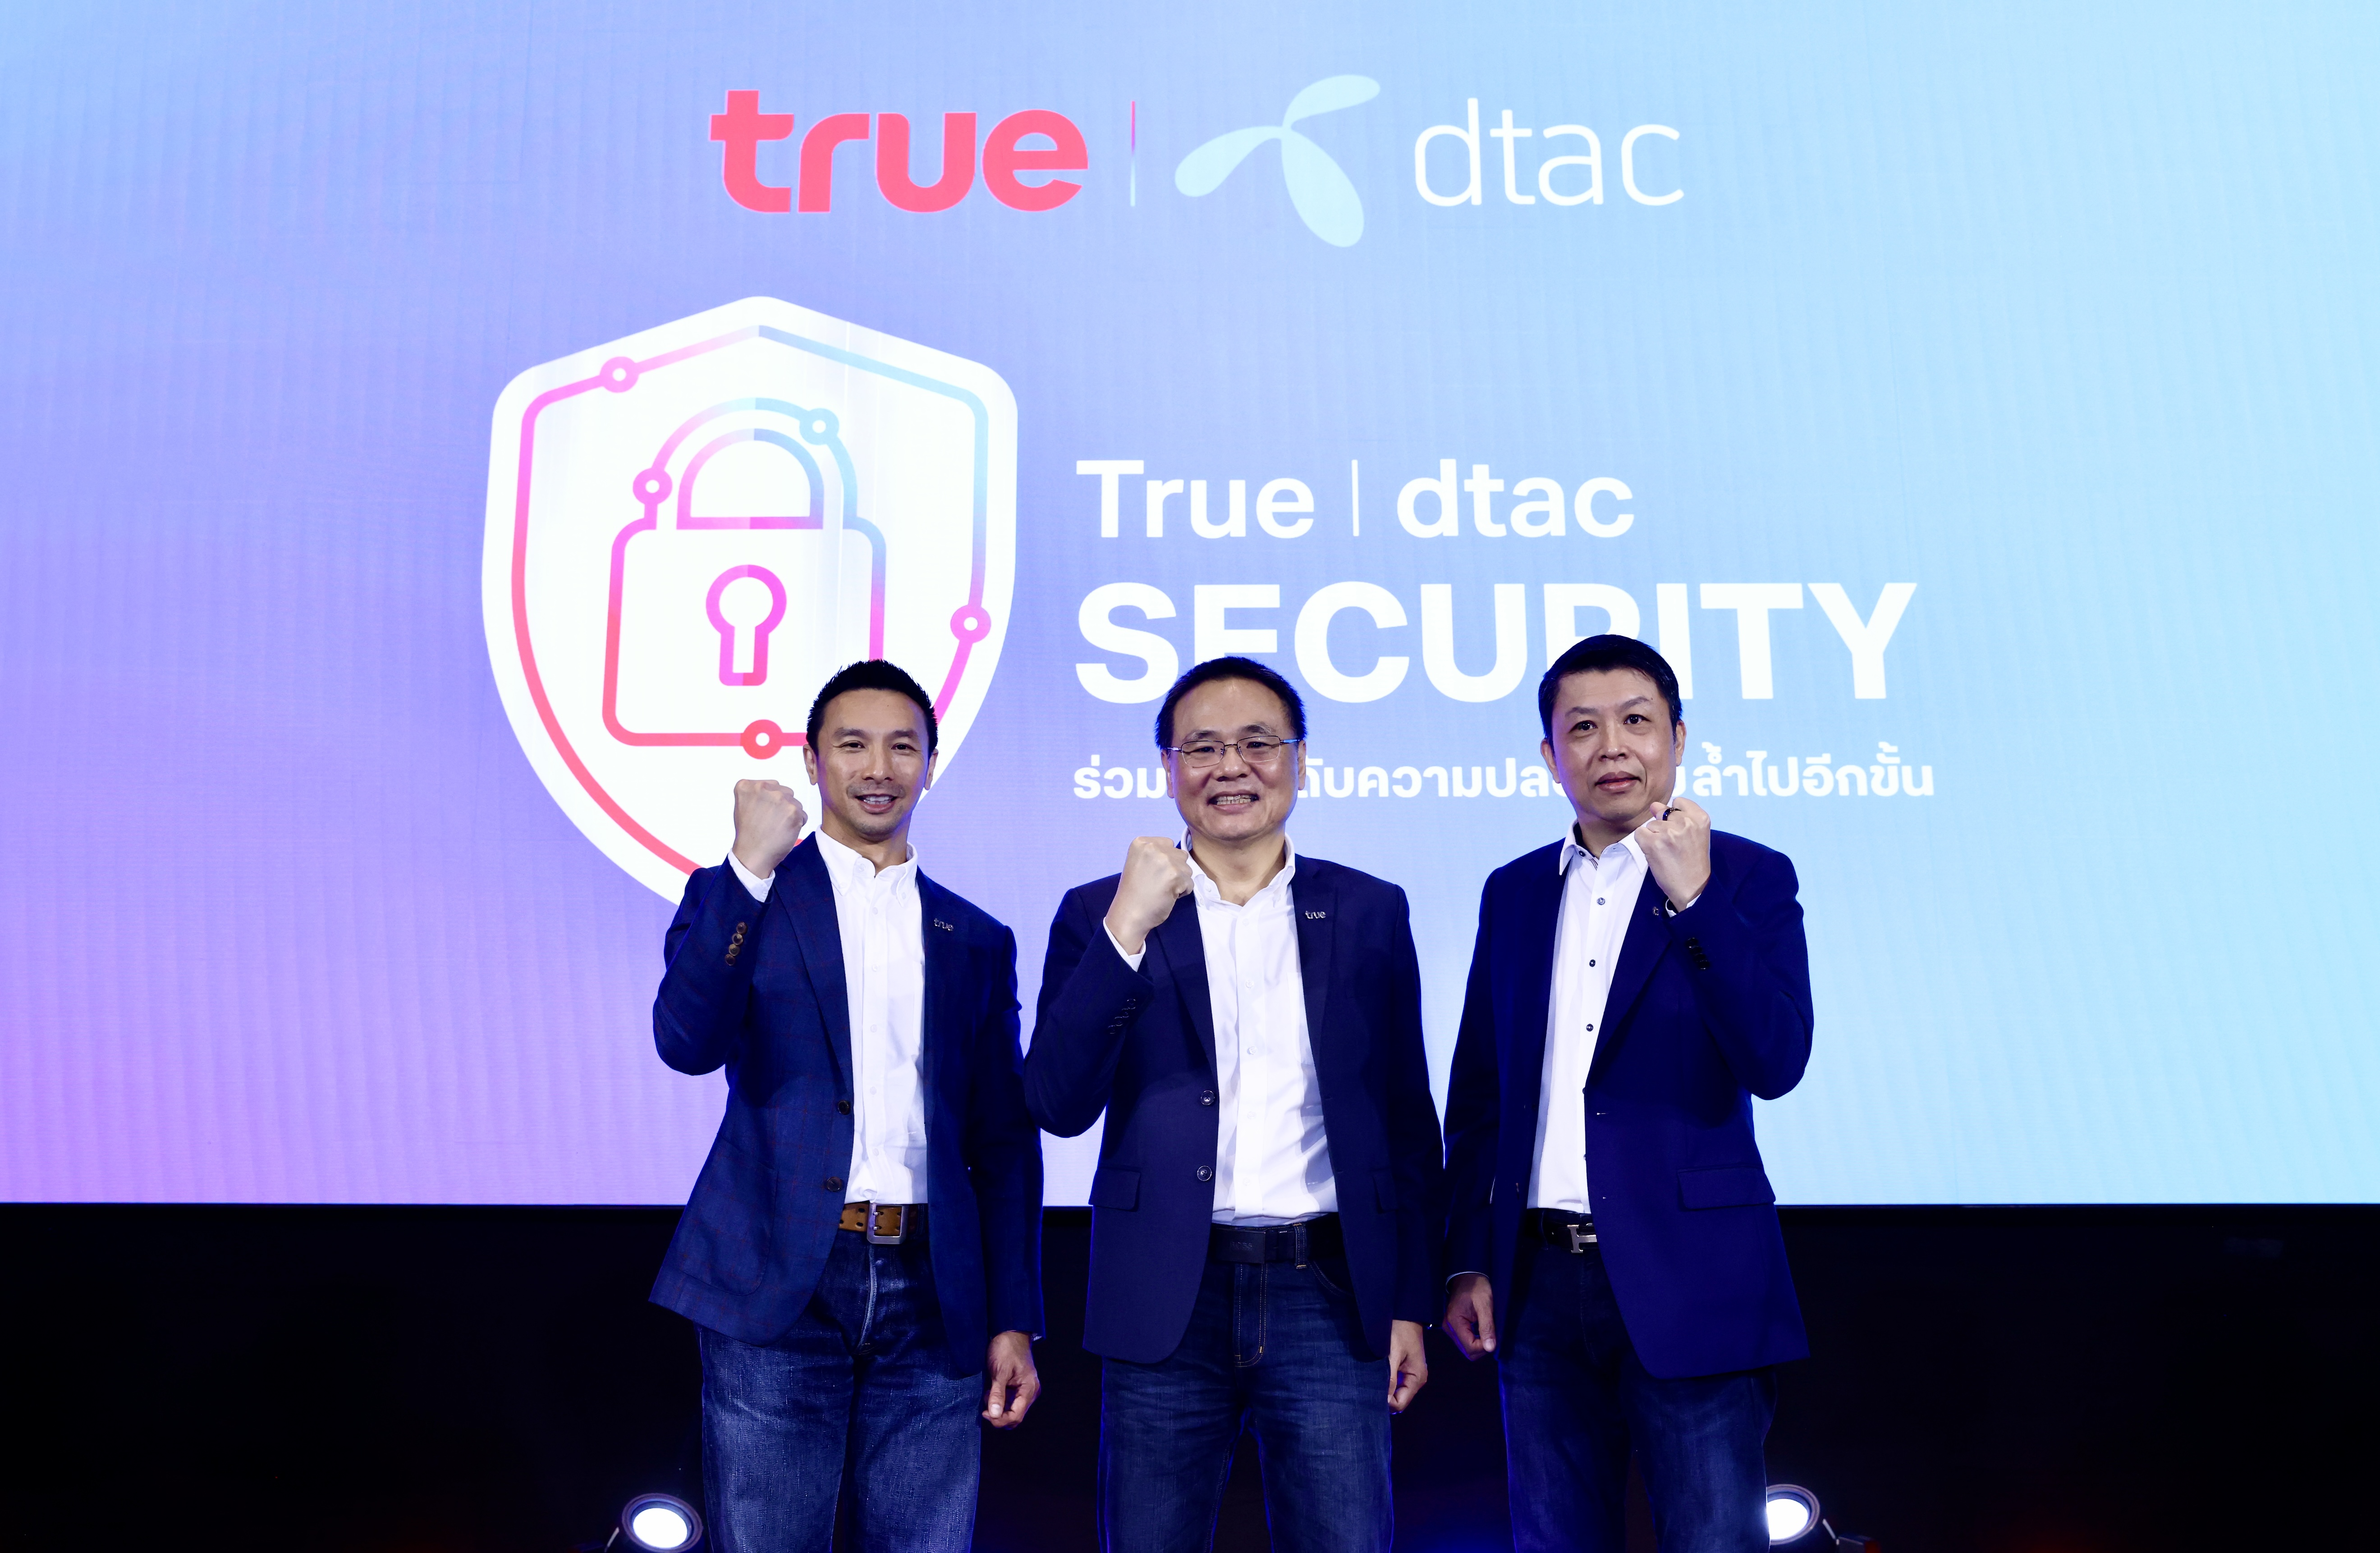 True dtac SECURITY ผนึกกำลังพาร์ทเนอร์ชั้นนำ เซฟทั้งโครงข่าย และทุกบริการดิจิทัลชู 3 จุดเด่น End-to-end Protection ป้องกันภัยคุกคามทางโลกออนไลน์